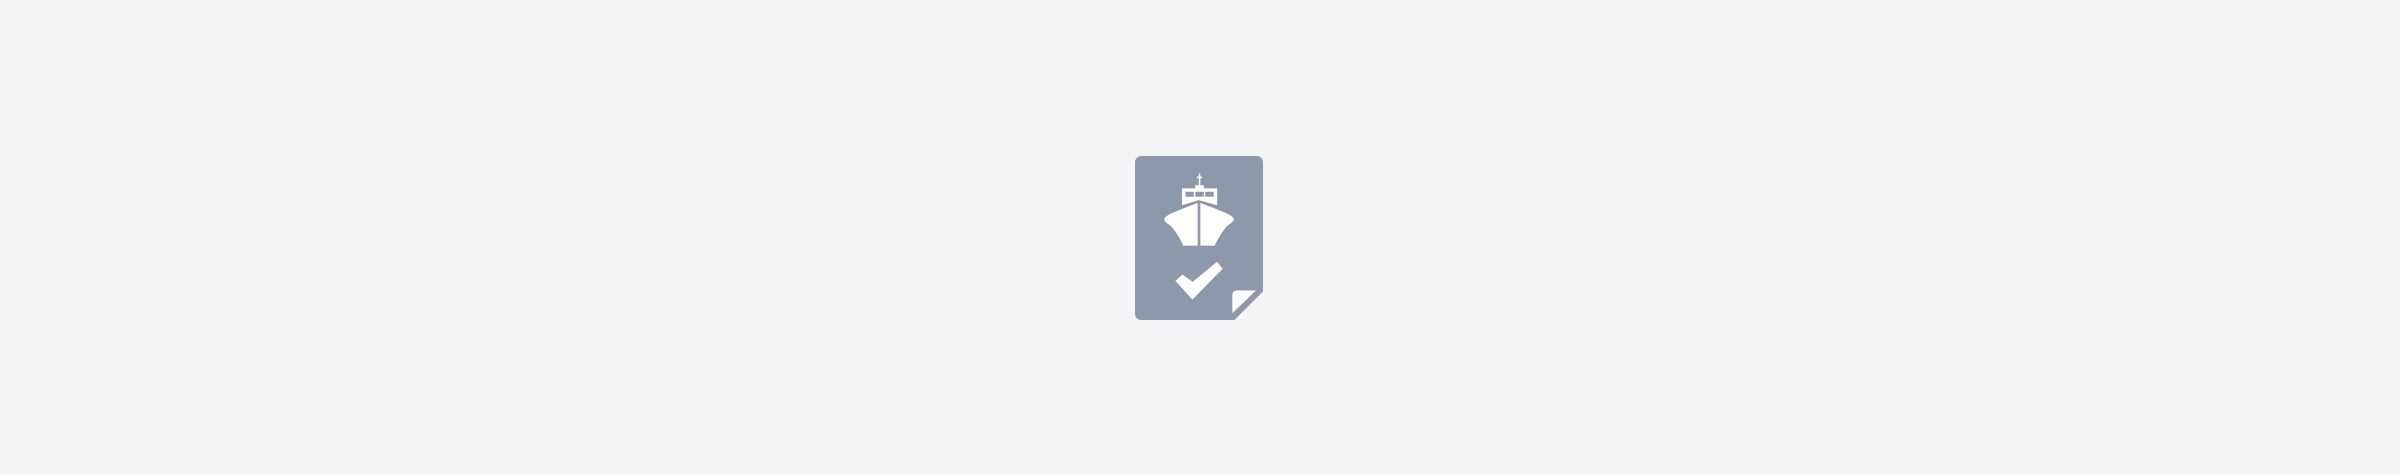 Transport maritime commercial